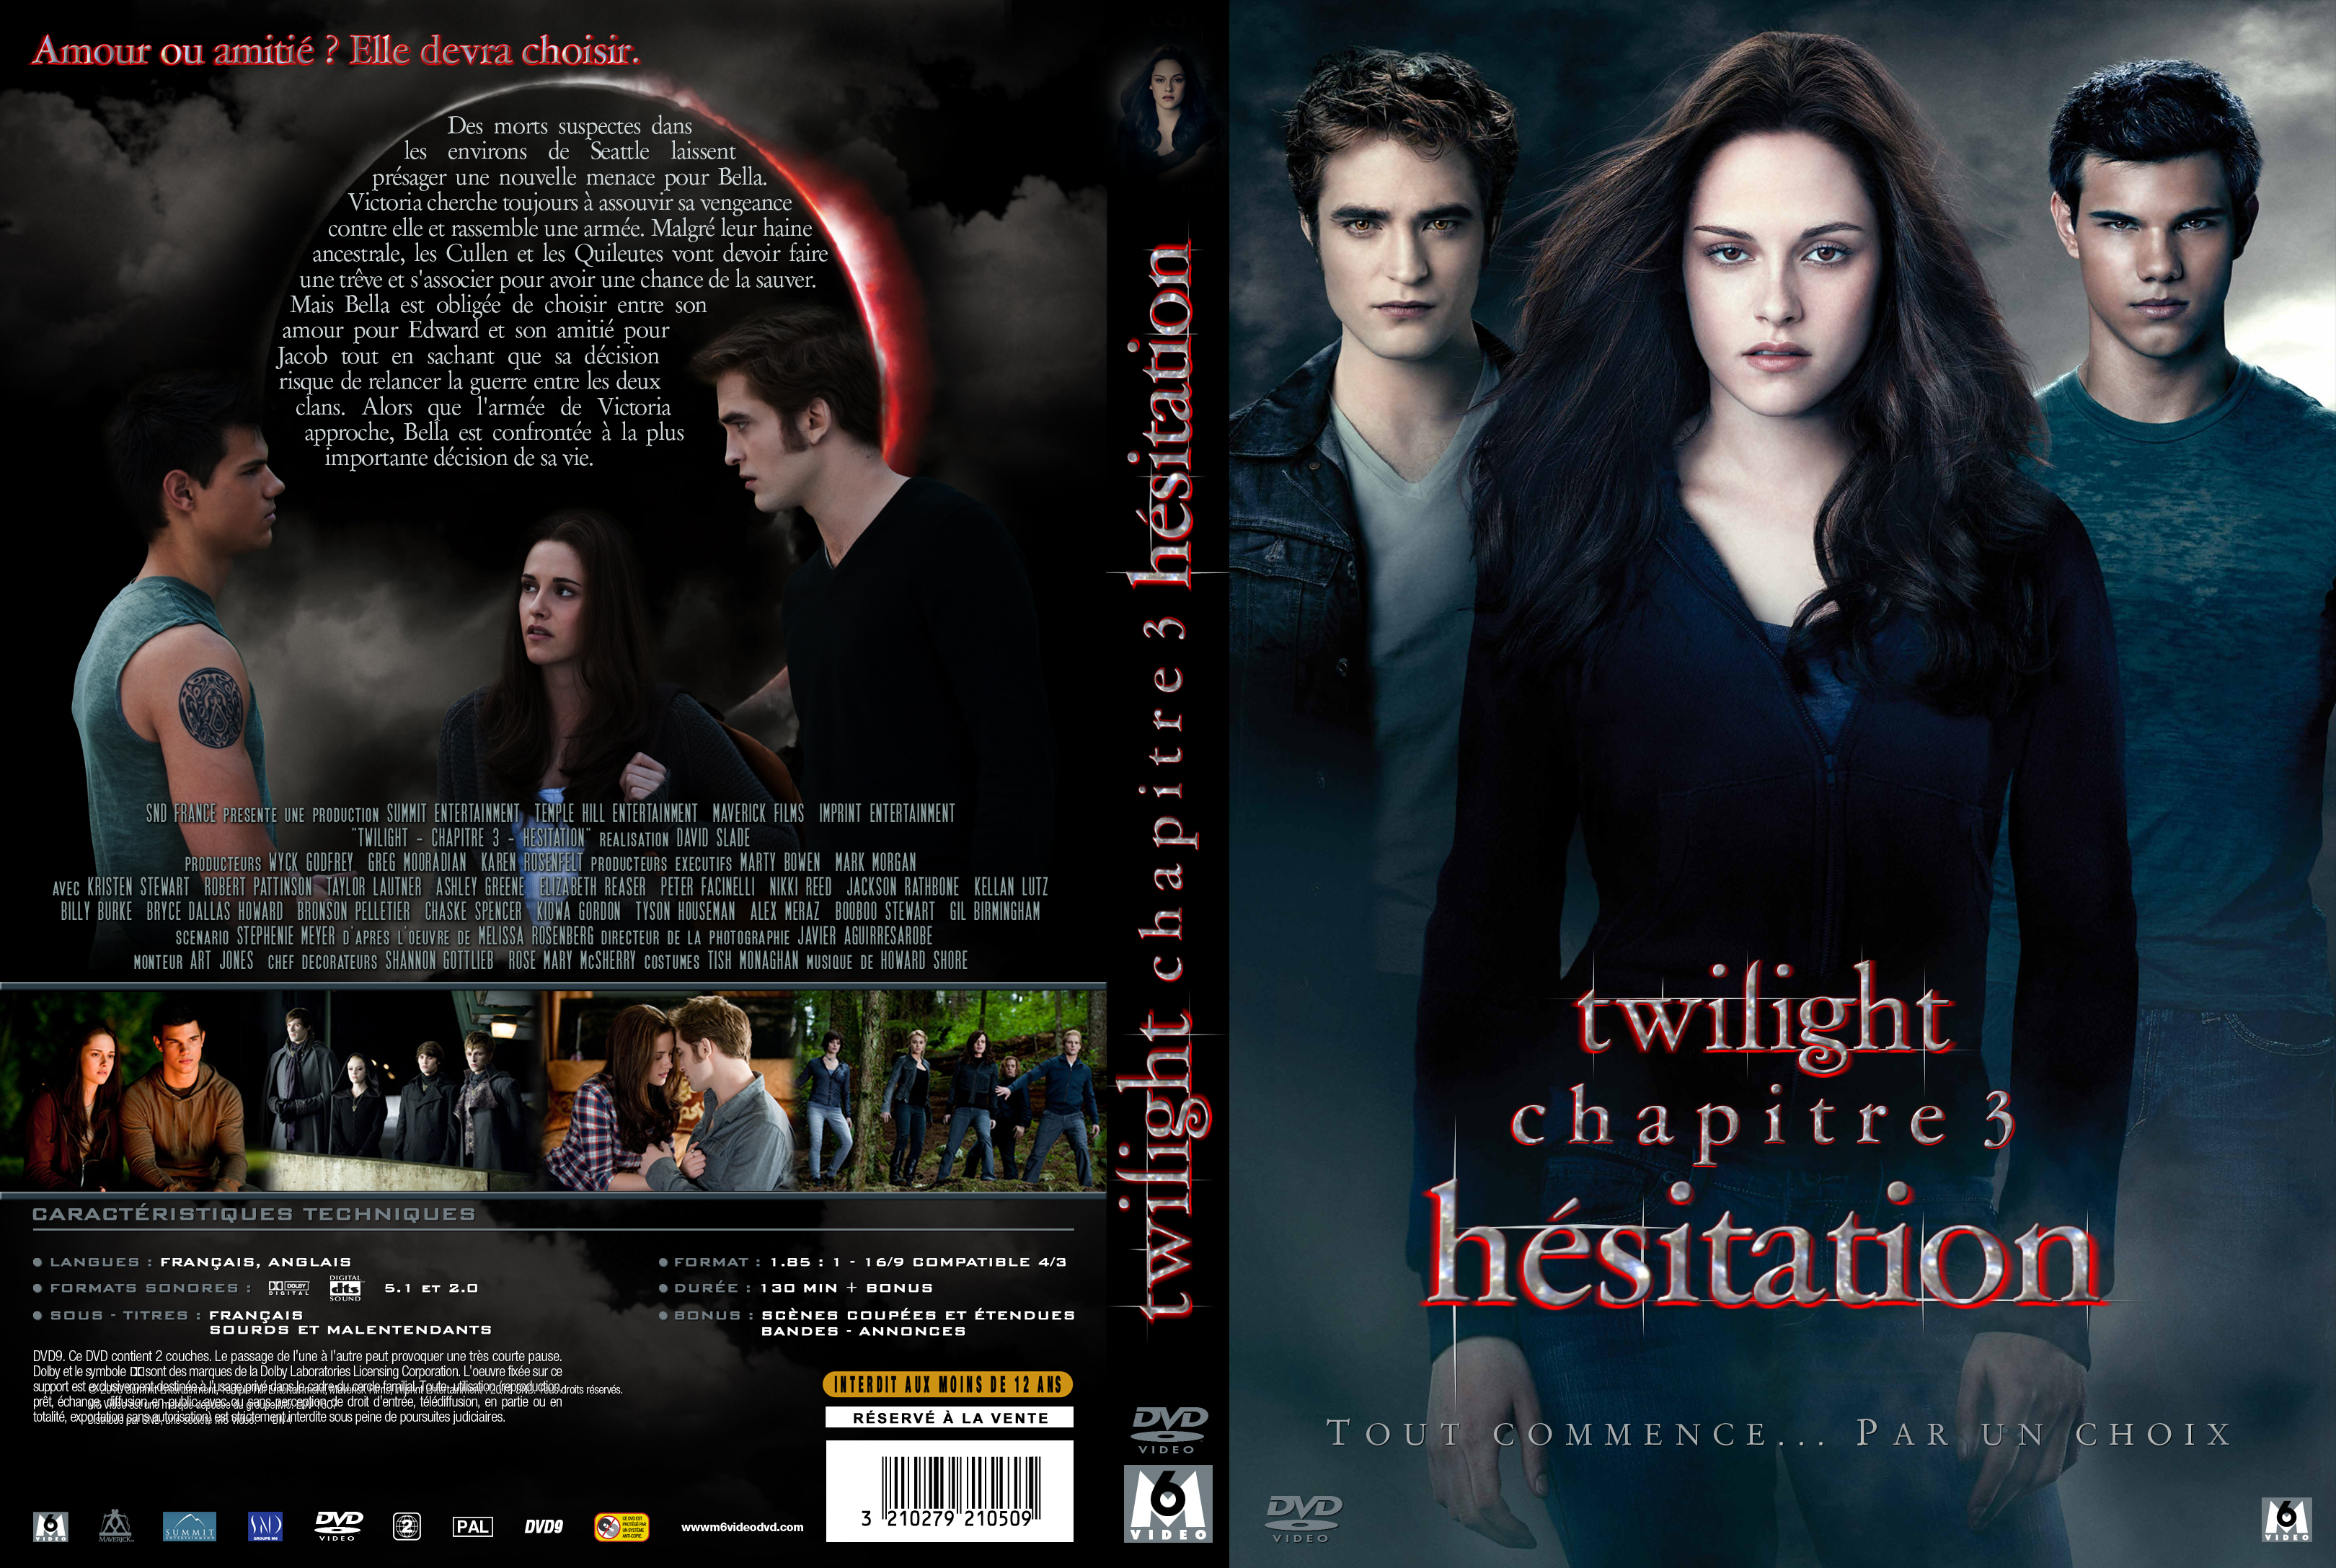 Jaquette DVD Twilight Chapitre 3 - Hesitation custom v2